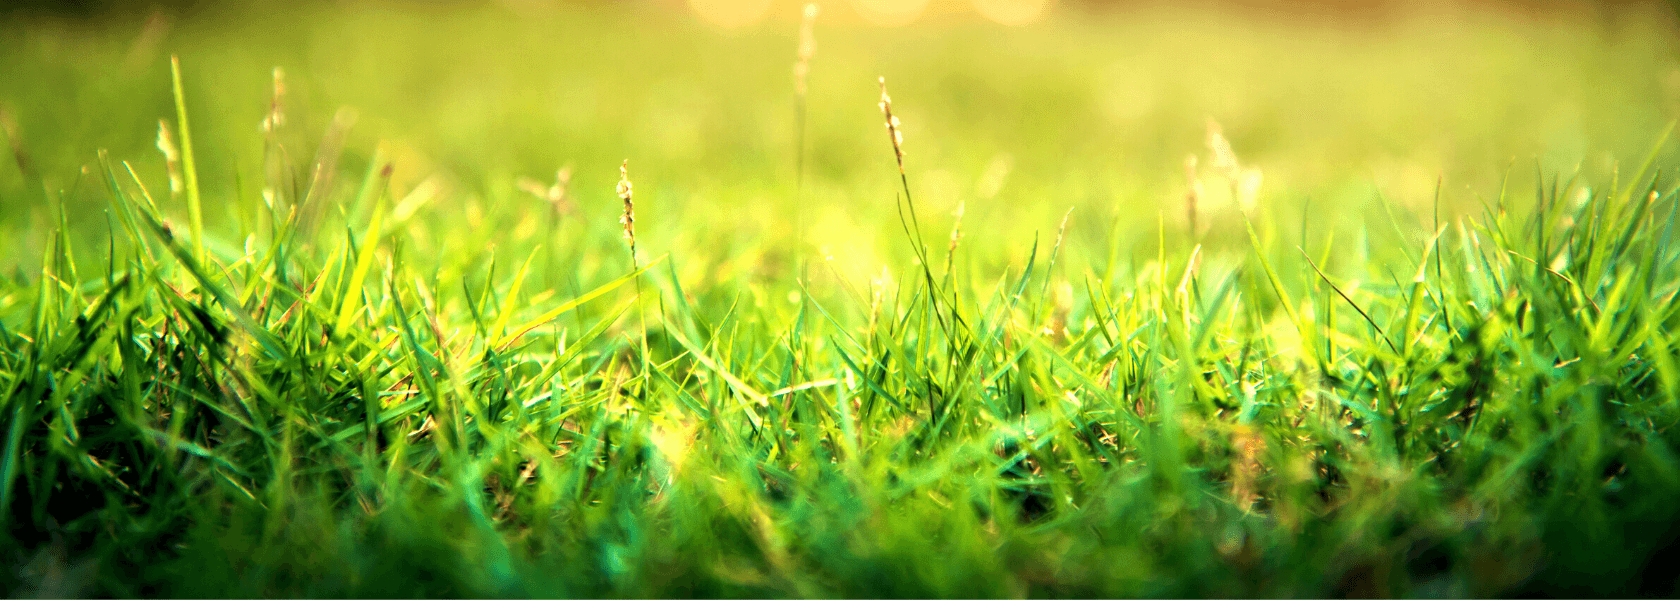 6 Steps to Make Your Grass Greener - Nuleaf